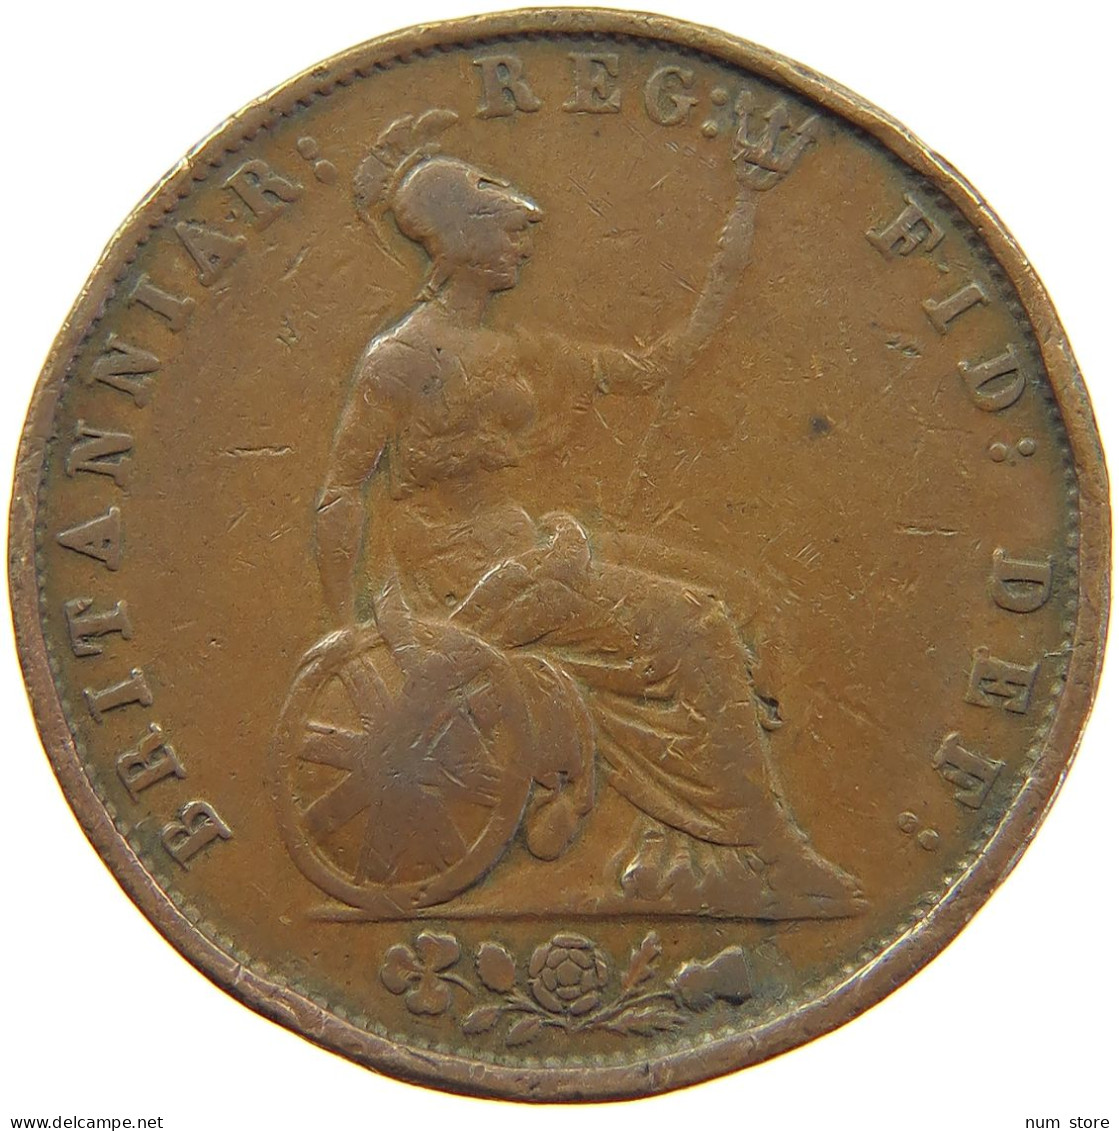 GREAT BRITAIN HALFPENNY 1853 Victoria 1837-1901 #s009 0245 - C. 1/2 Penny